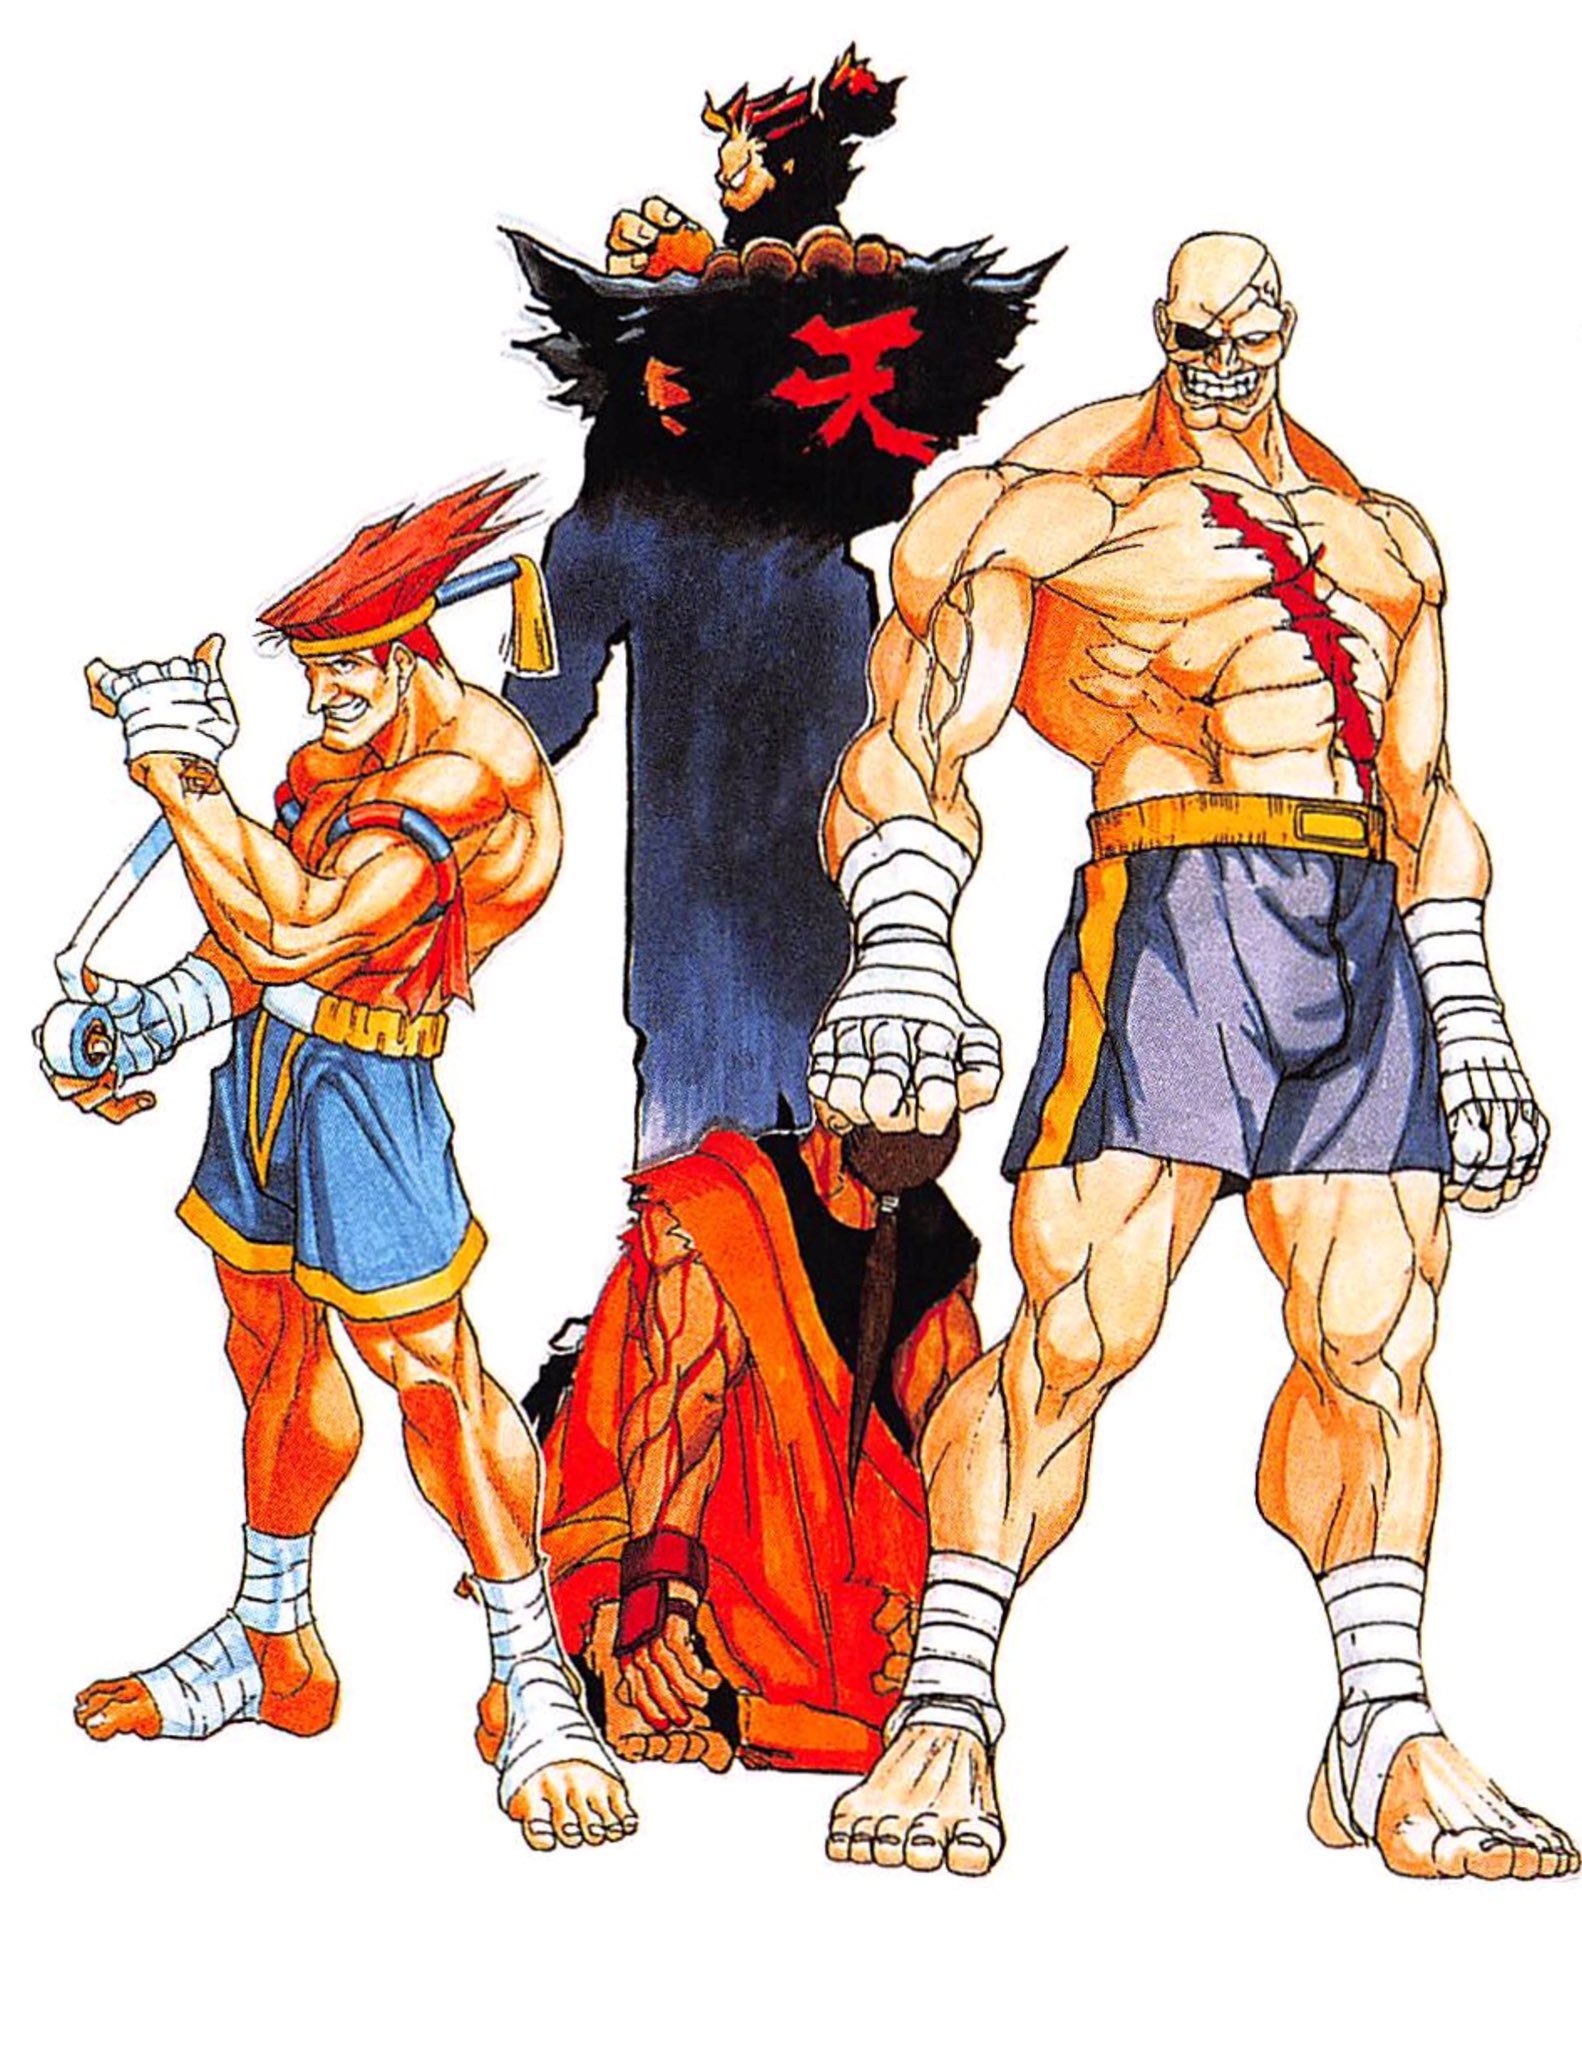 𝙴𝙸𝙶𝙷𝚃 𝙱𝙸𝚃 𝙿𝙰𝙽𝙳𝙰 🐼 on X: 🎮 Street Fighter Alpha 2  illustration. ✍️ illustrator - Unknown #Sagat #Capcom #gamingcommunity  #Adon #Akuma #DanHibiki #Adon #arcade #StreetFighter #StreetFighterAlpha  #FGC #fightinggames #PlayStation